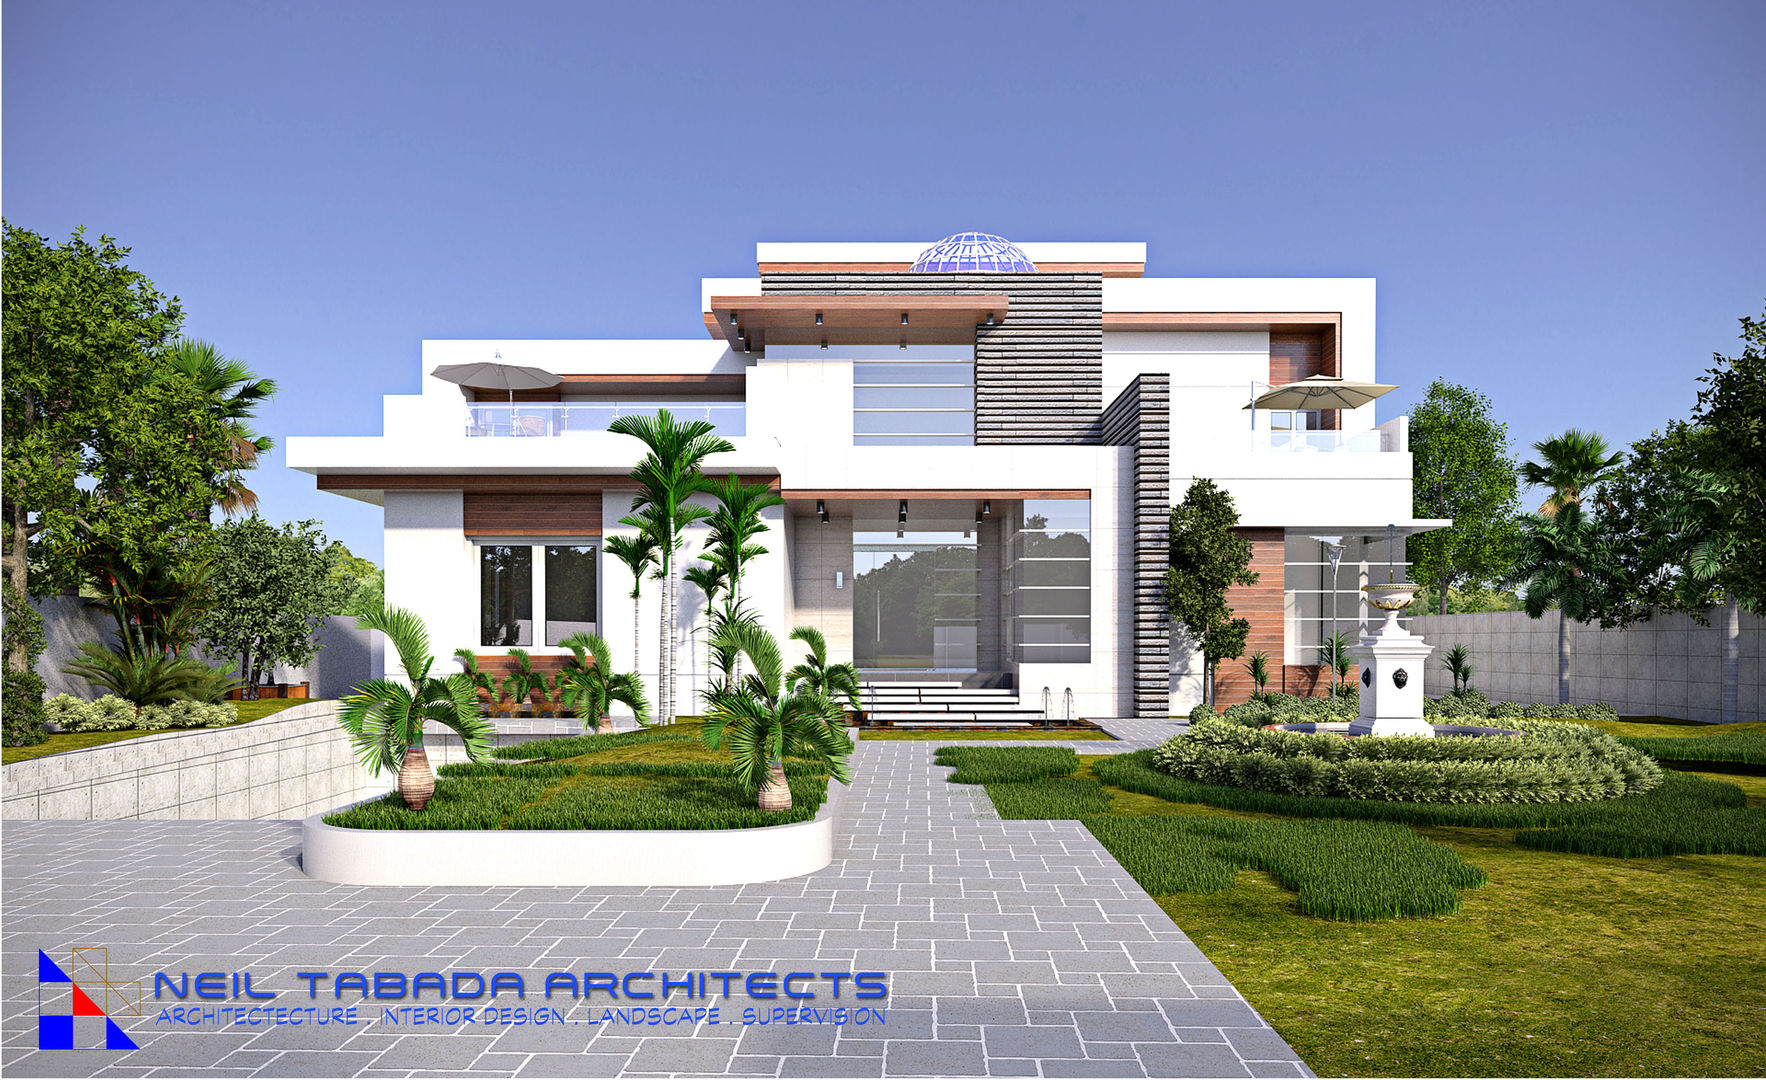 LSS VILLA 5, NEIL TABADA ARCHITECTS NEIL TABADA ARCHITECTS Casas modernas: Ideas, diseños y decoración